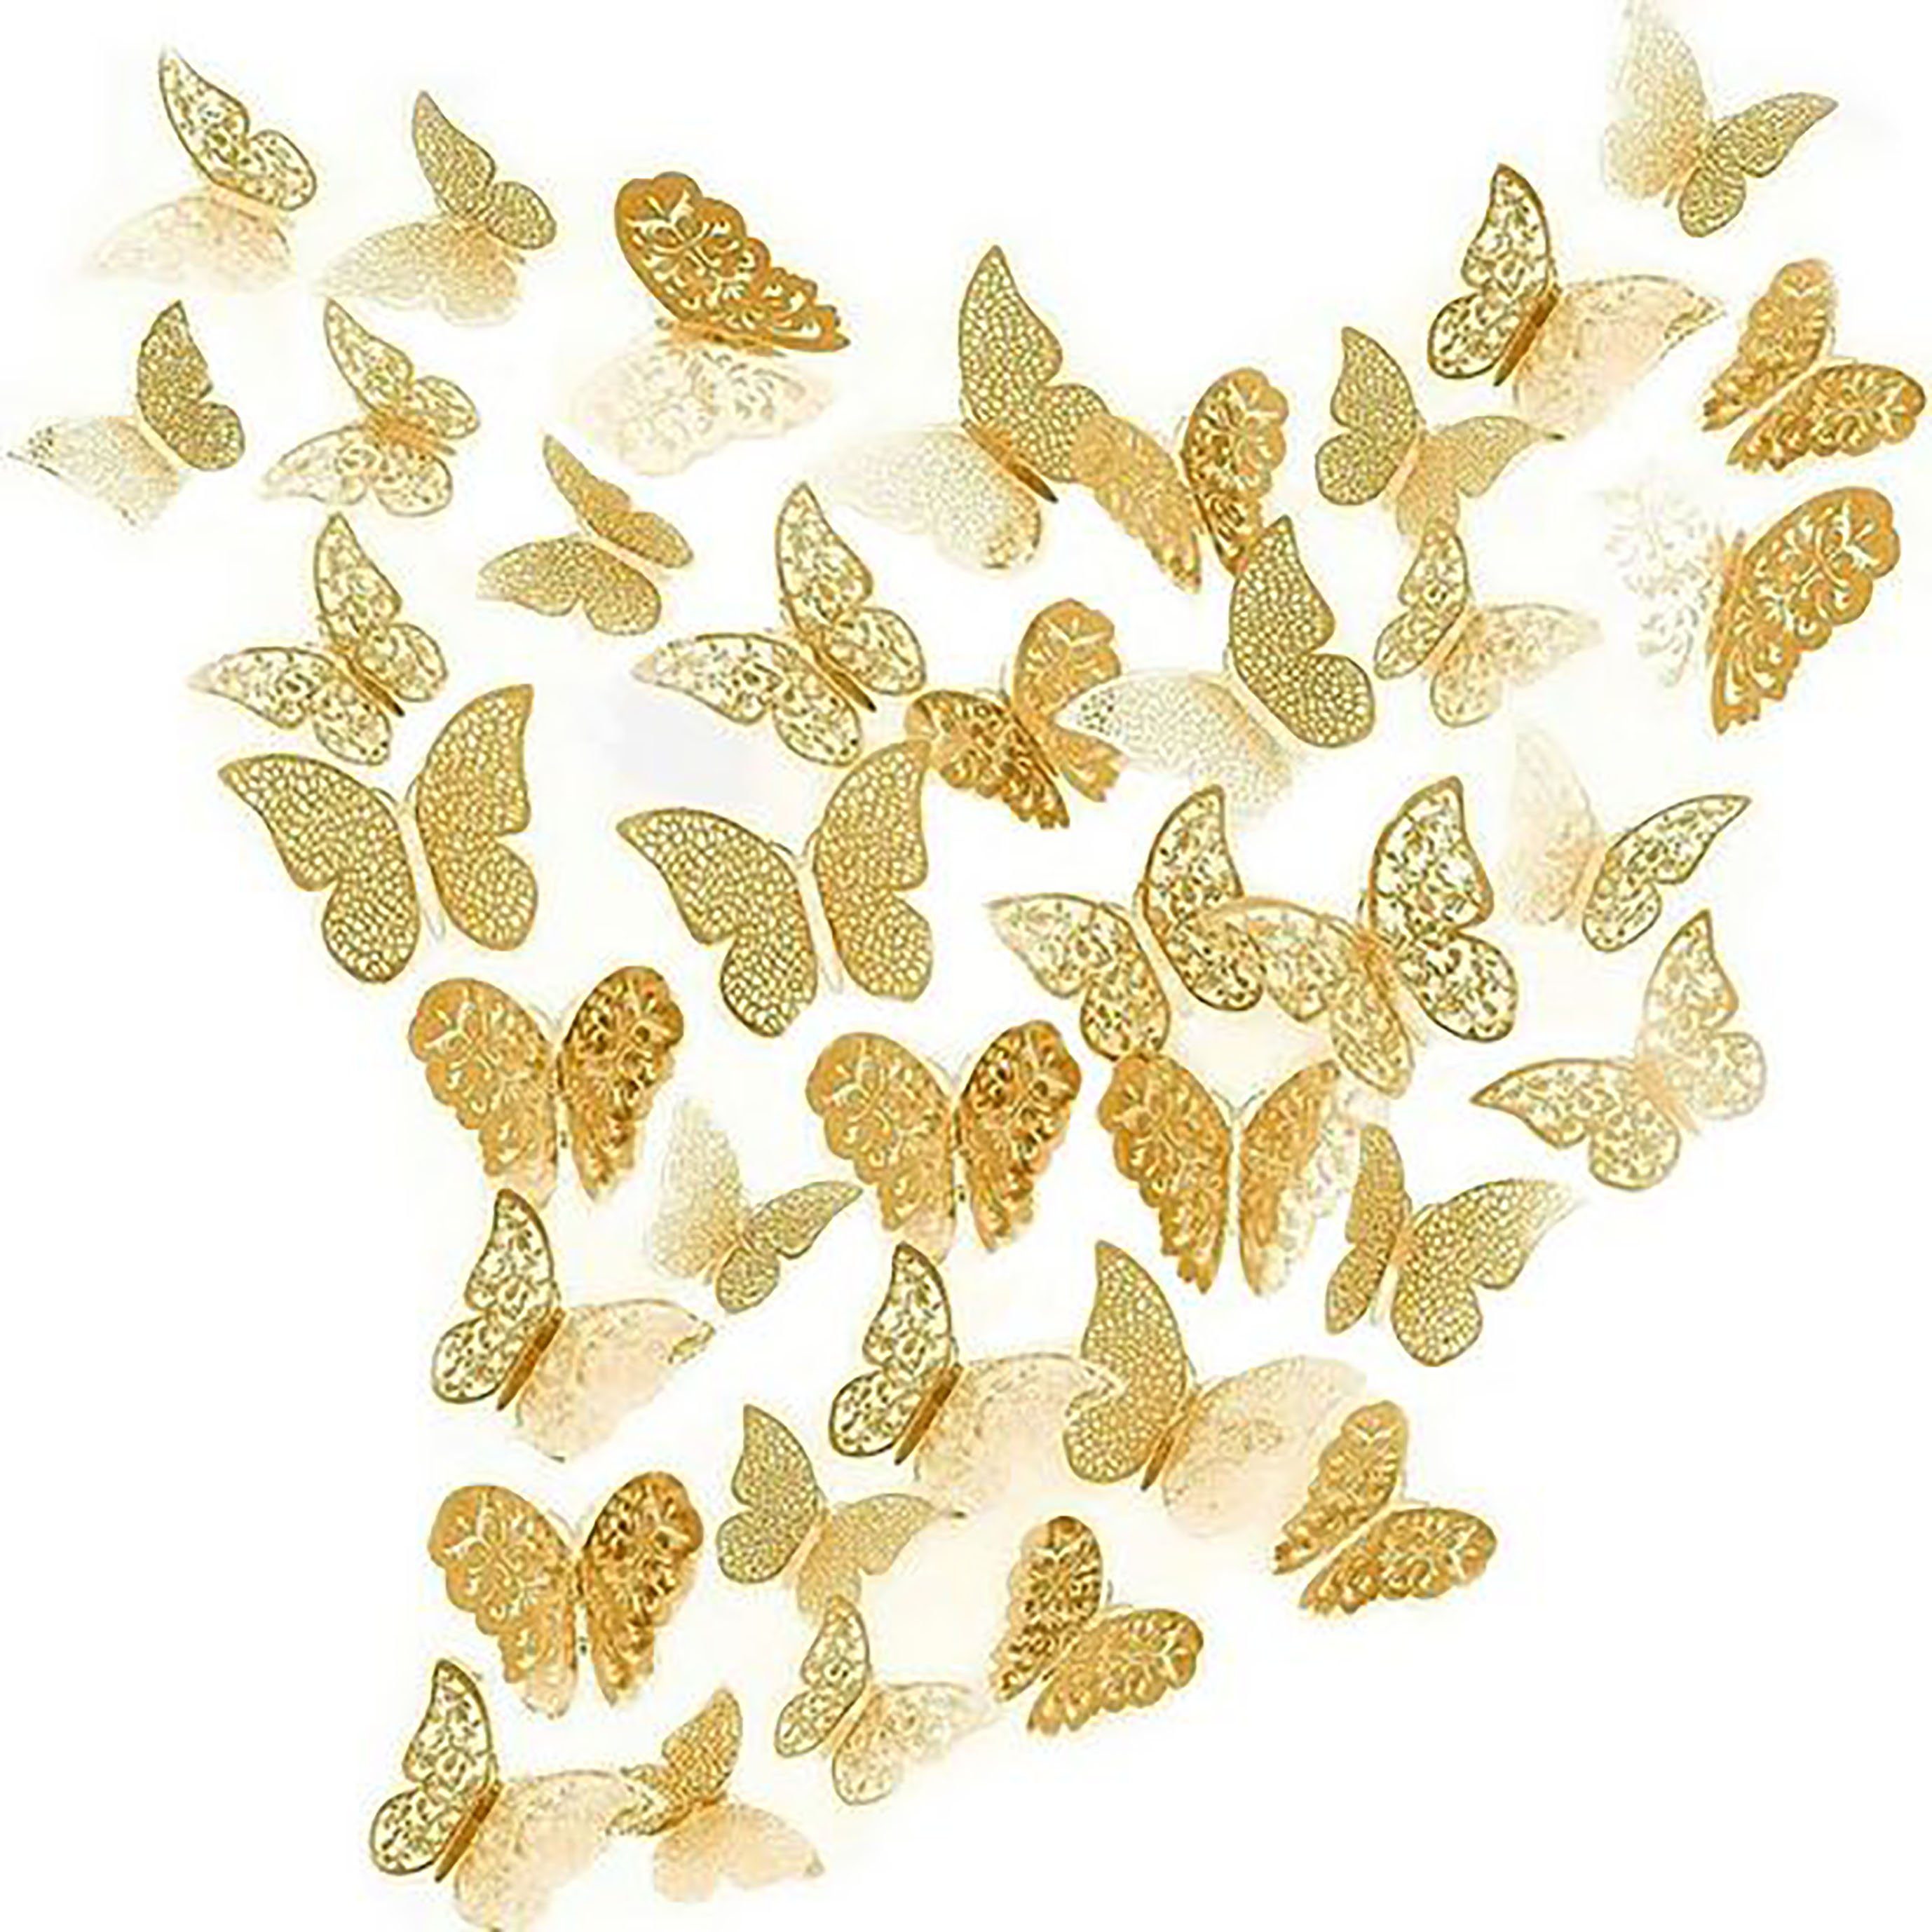 SRRINM Papierdekoration Wandaufkleber 3D Abziehbild Schmetterling Dekoration